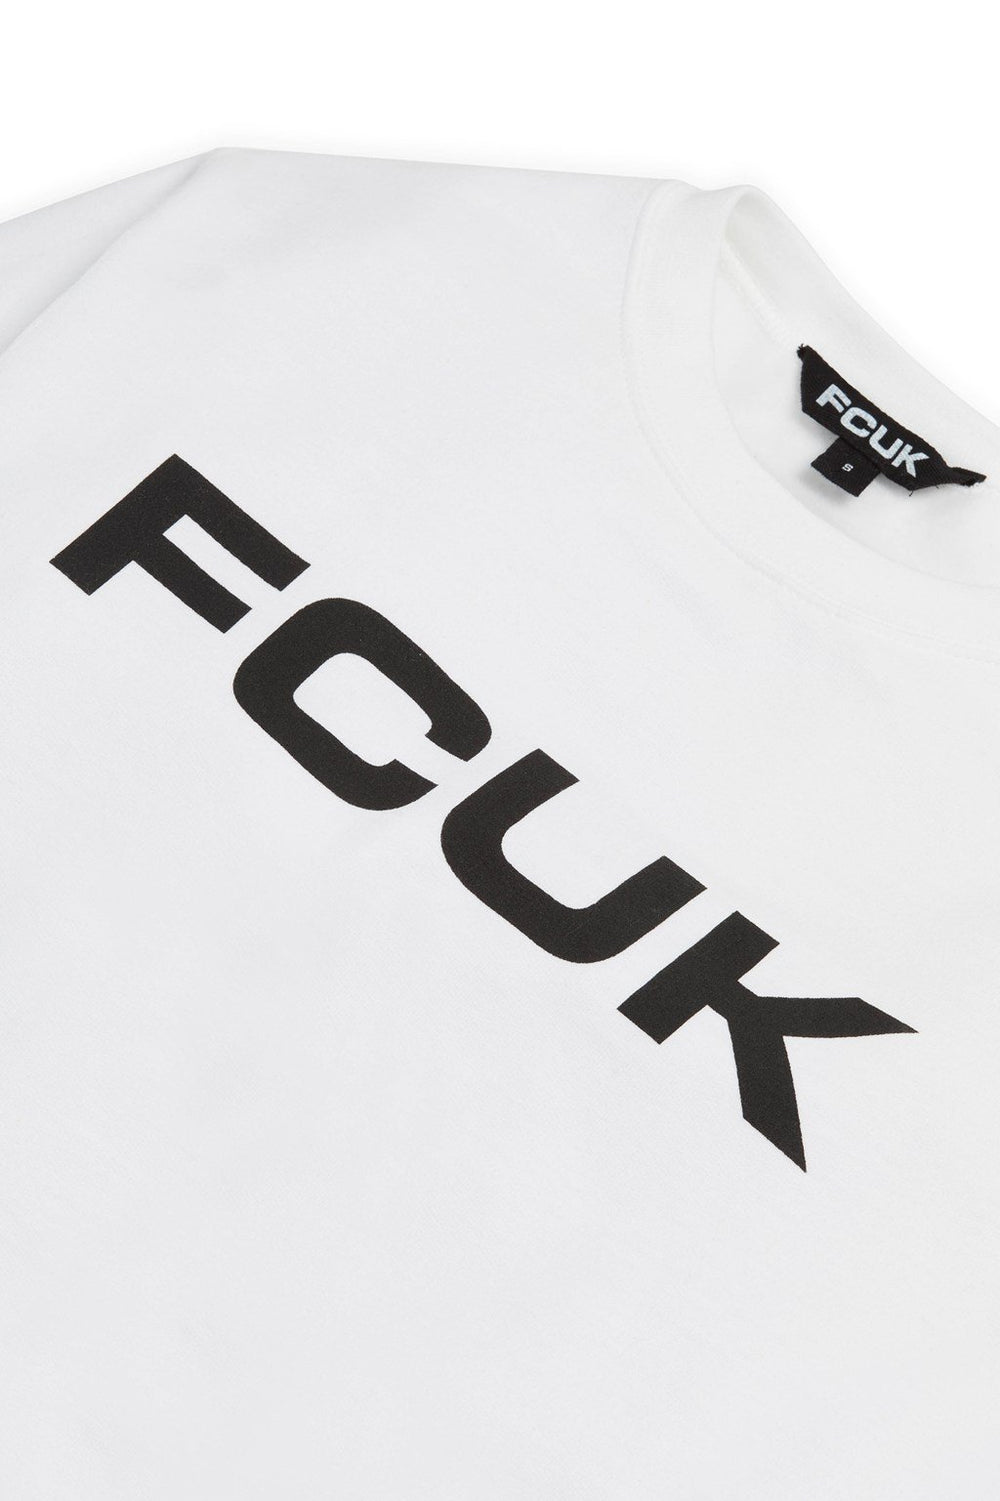 FCUK LOGO T-SHIRT White/Black